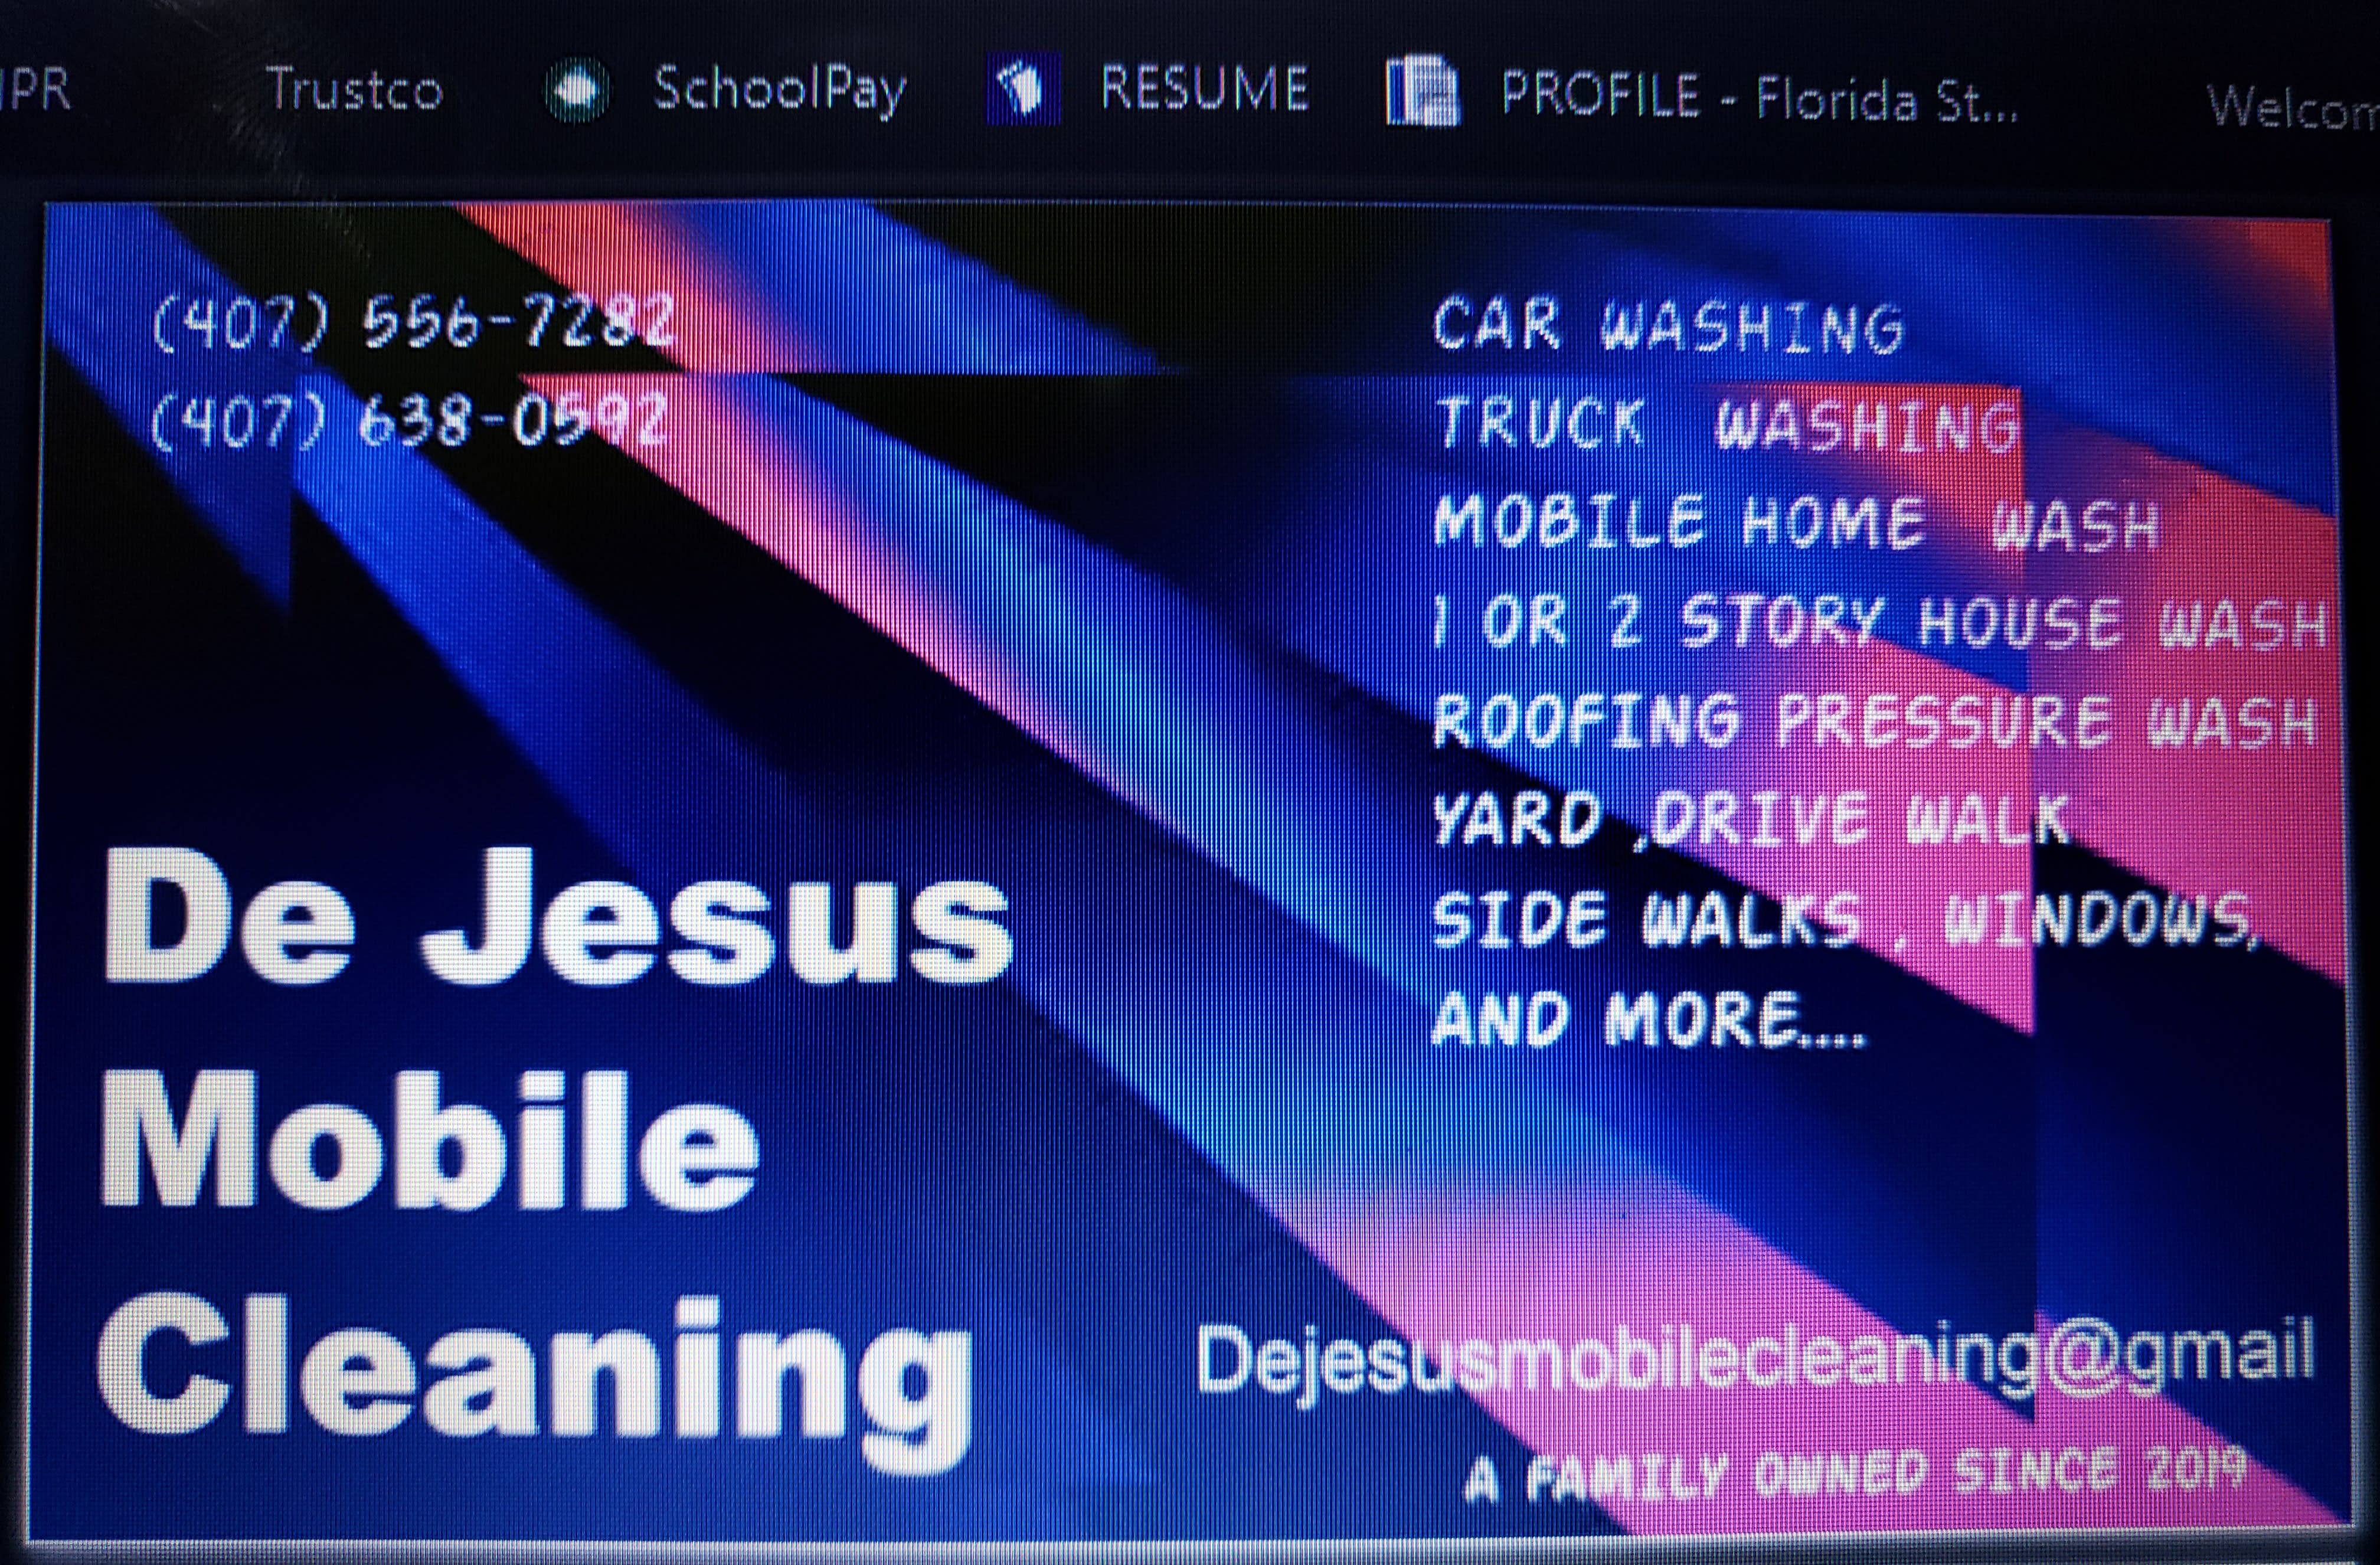 De Jesus Mobile Cleaning